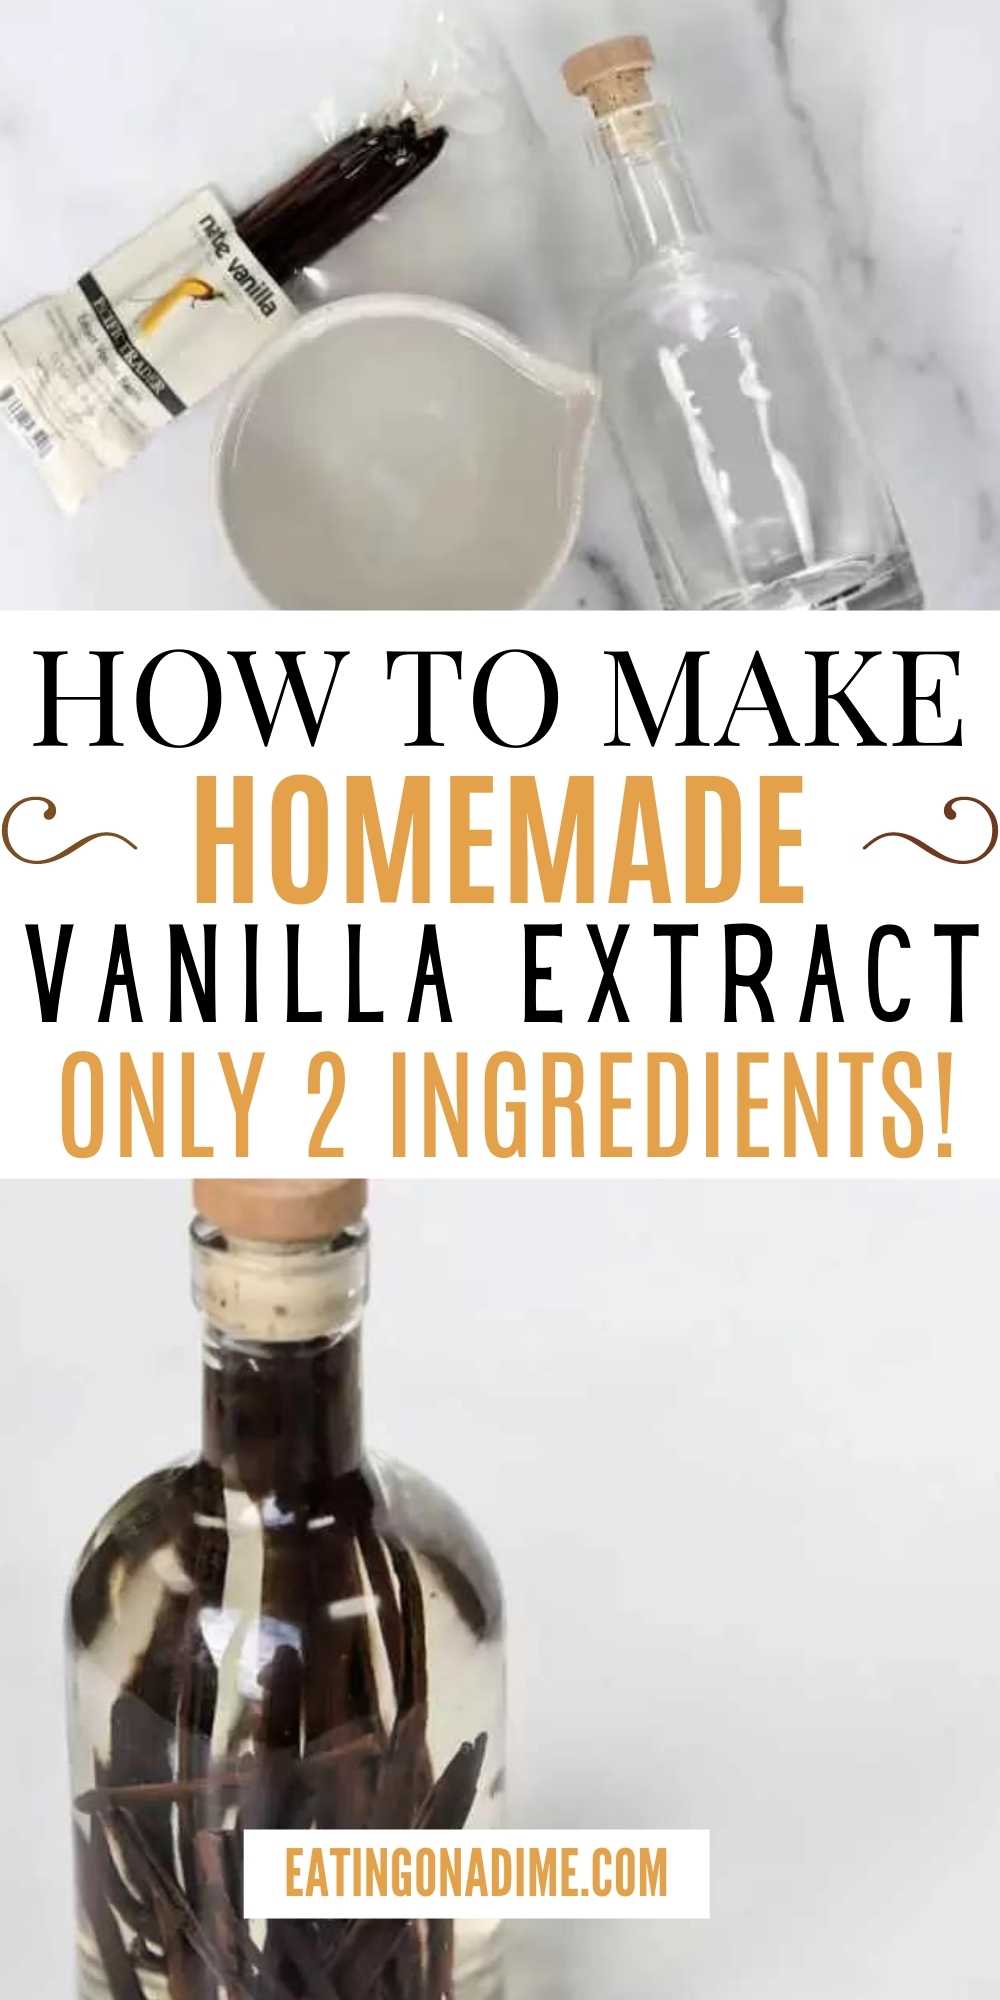 https://www.eatingonadime.com/wp-content/uploads/2019/12/Homemade-Vanilla-Extract-Pin-3.jpg